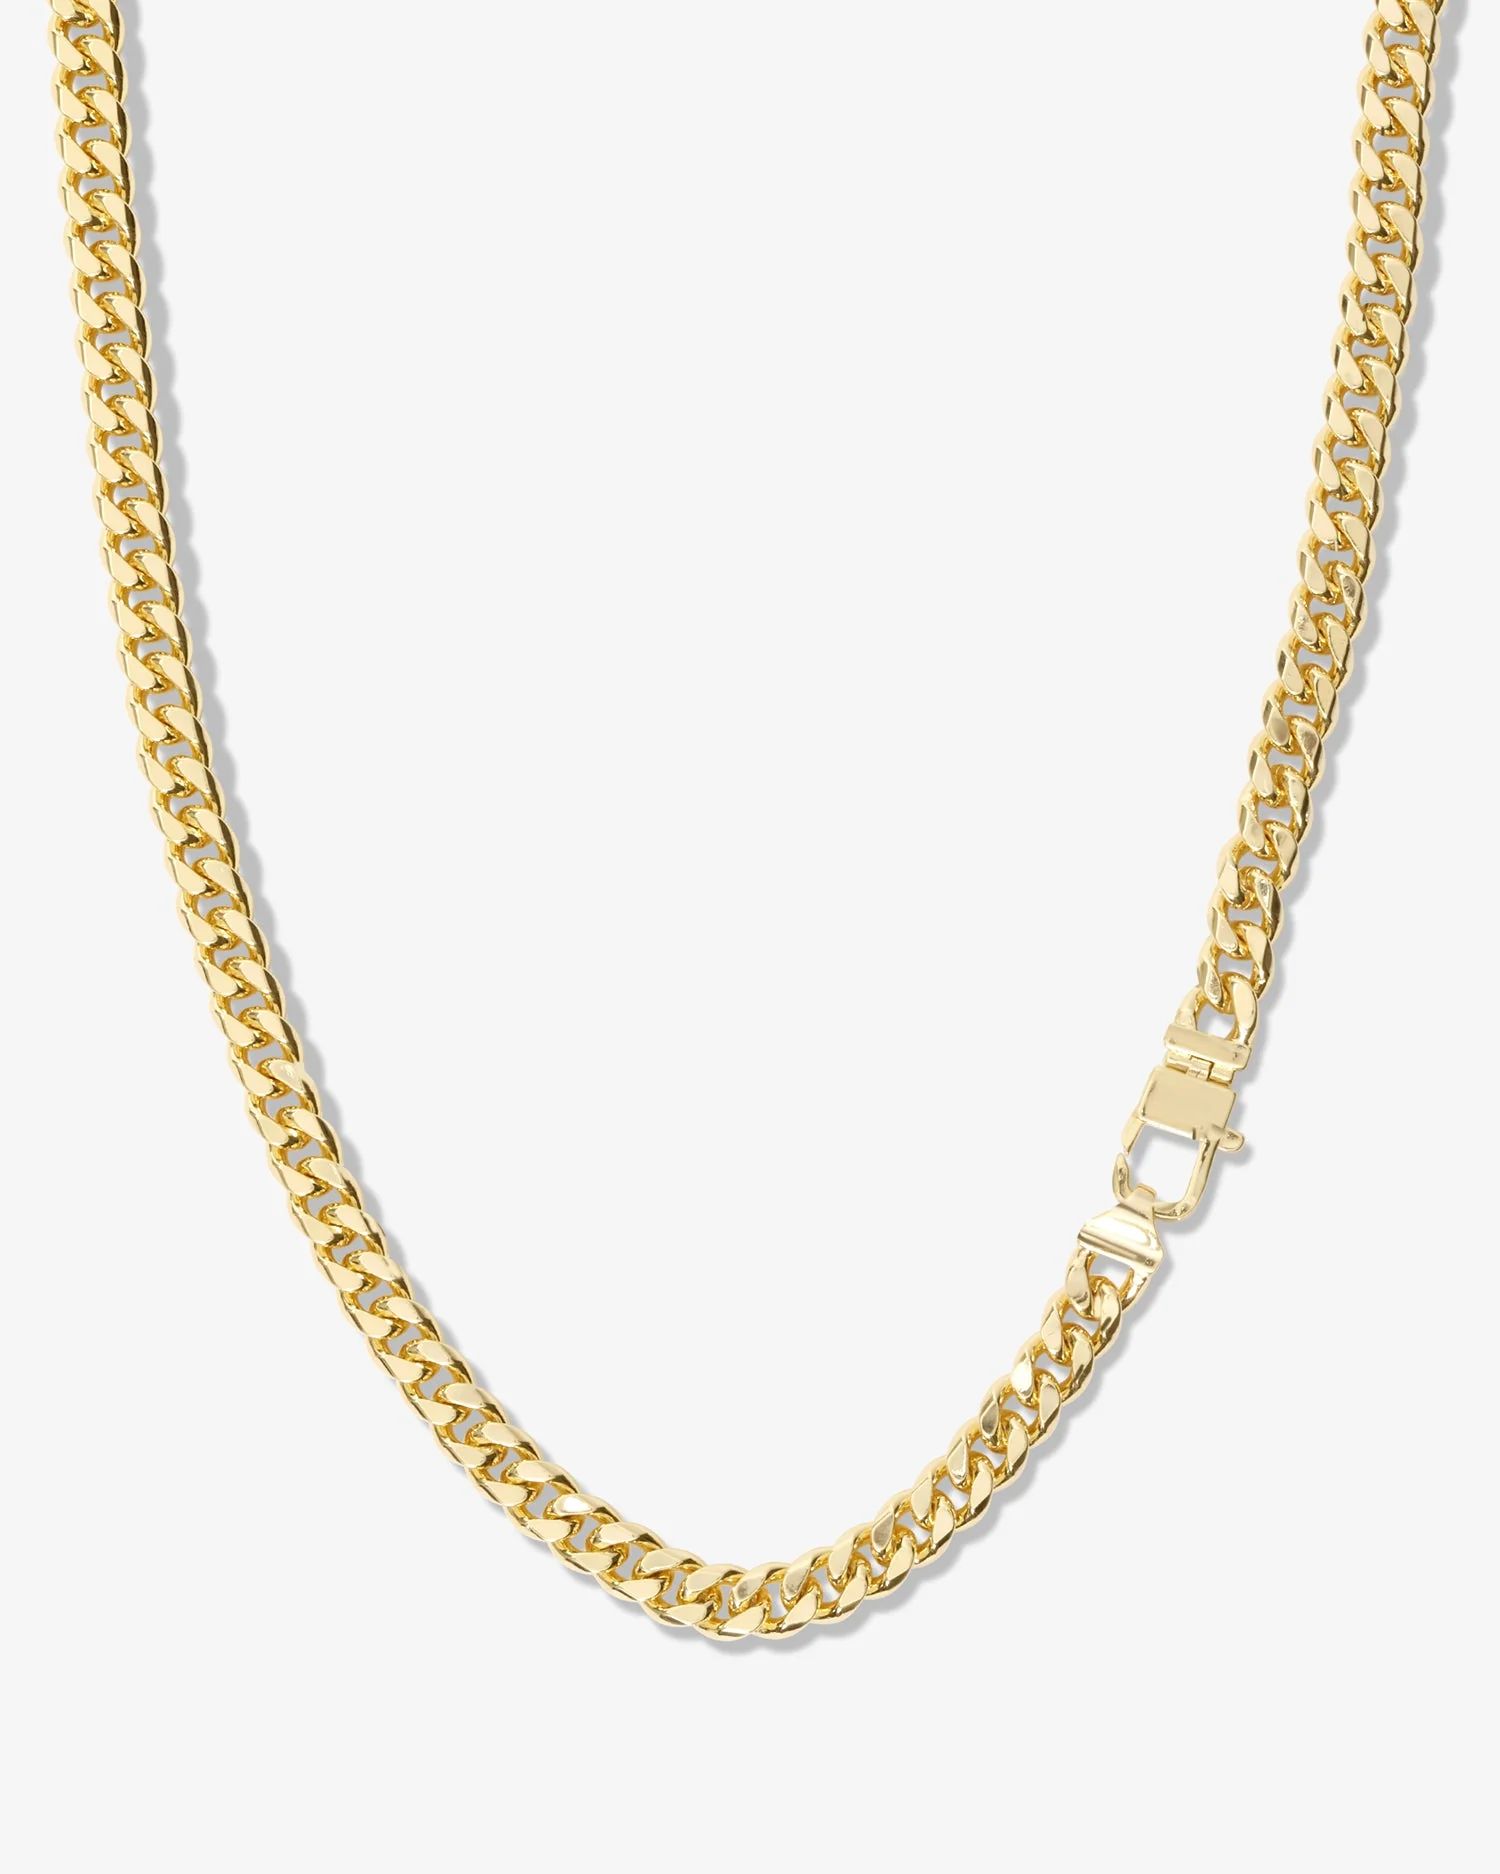 Julian Cuban Chain Necklace 6.8mm - Gold | Melinda Maria